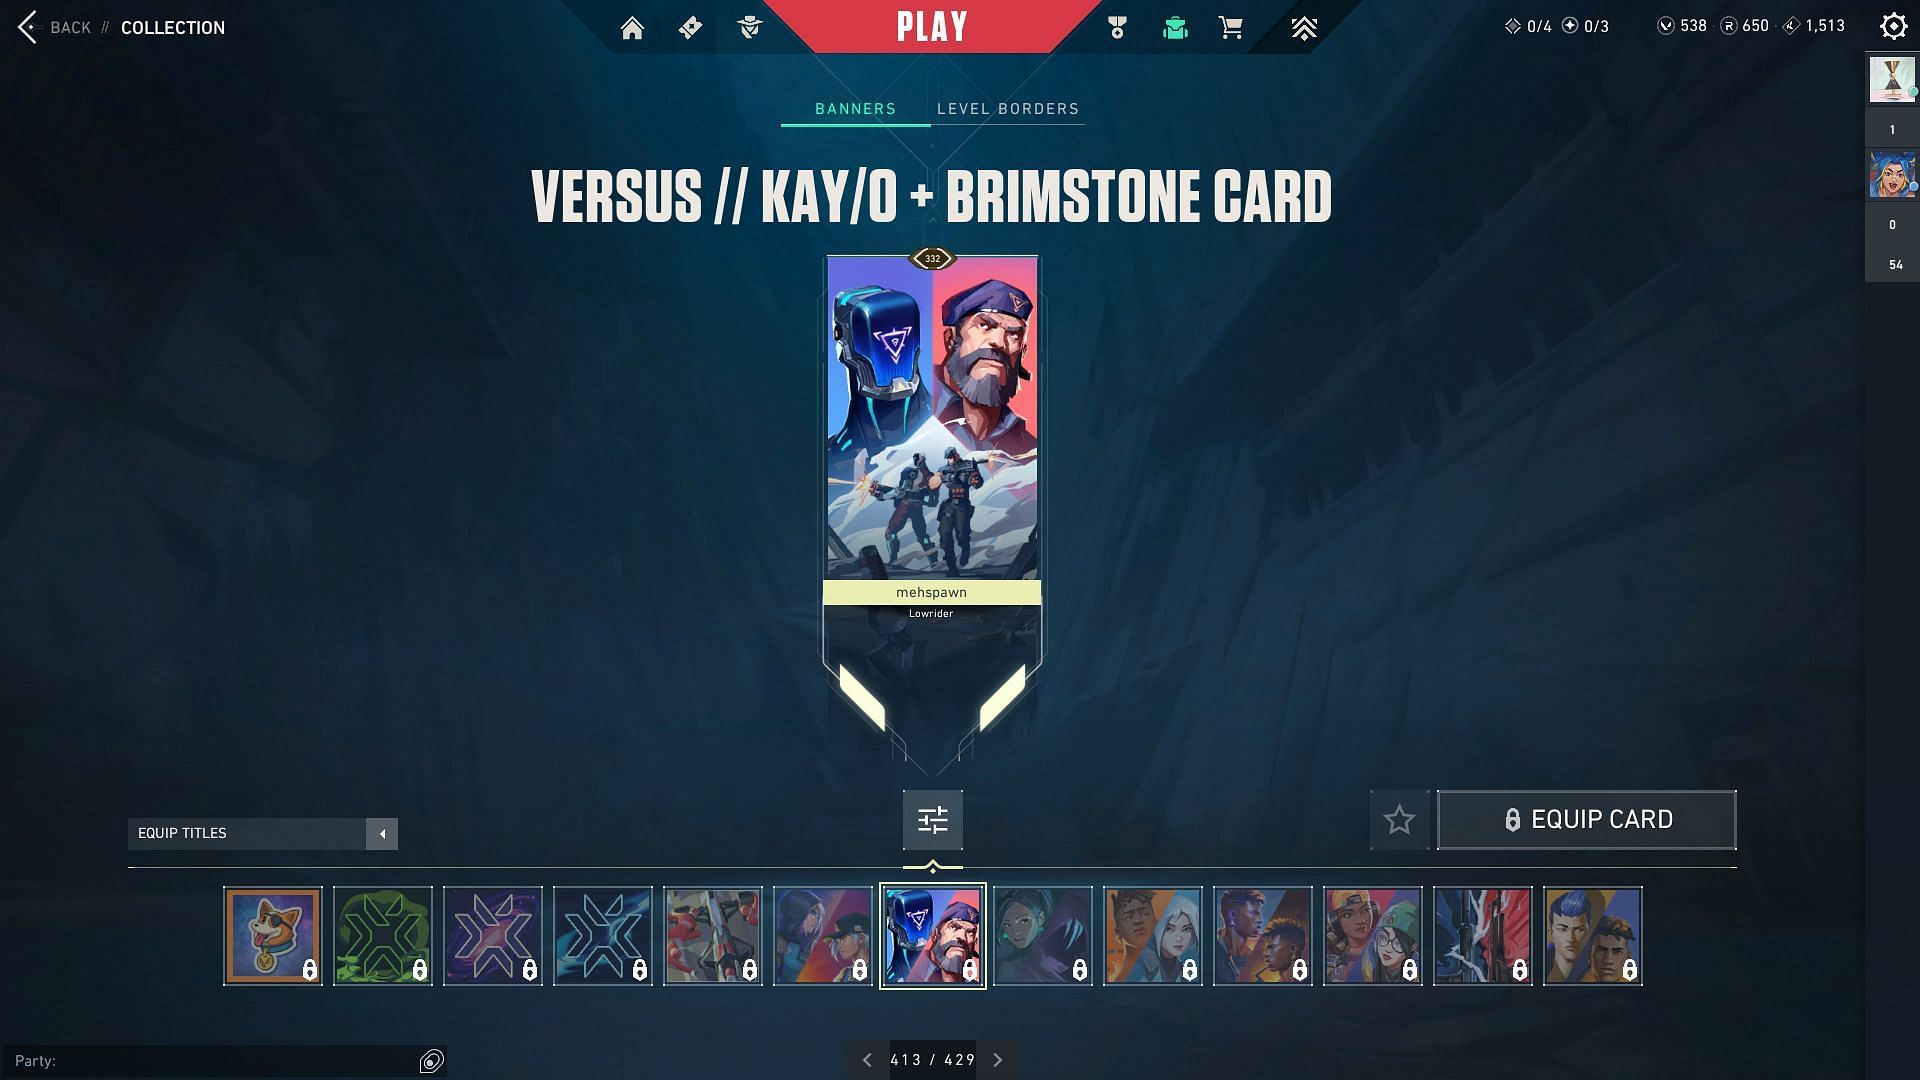 The Versus KAY/O + Brimstone Player Card (Image via Riot Games)